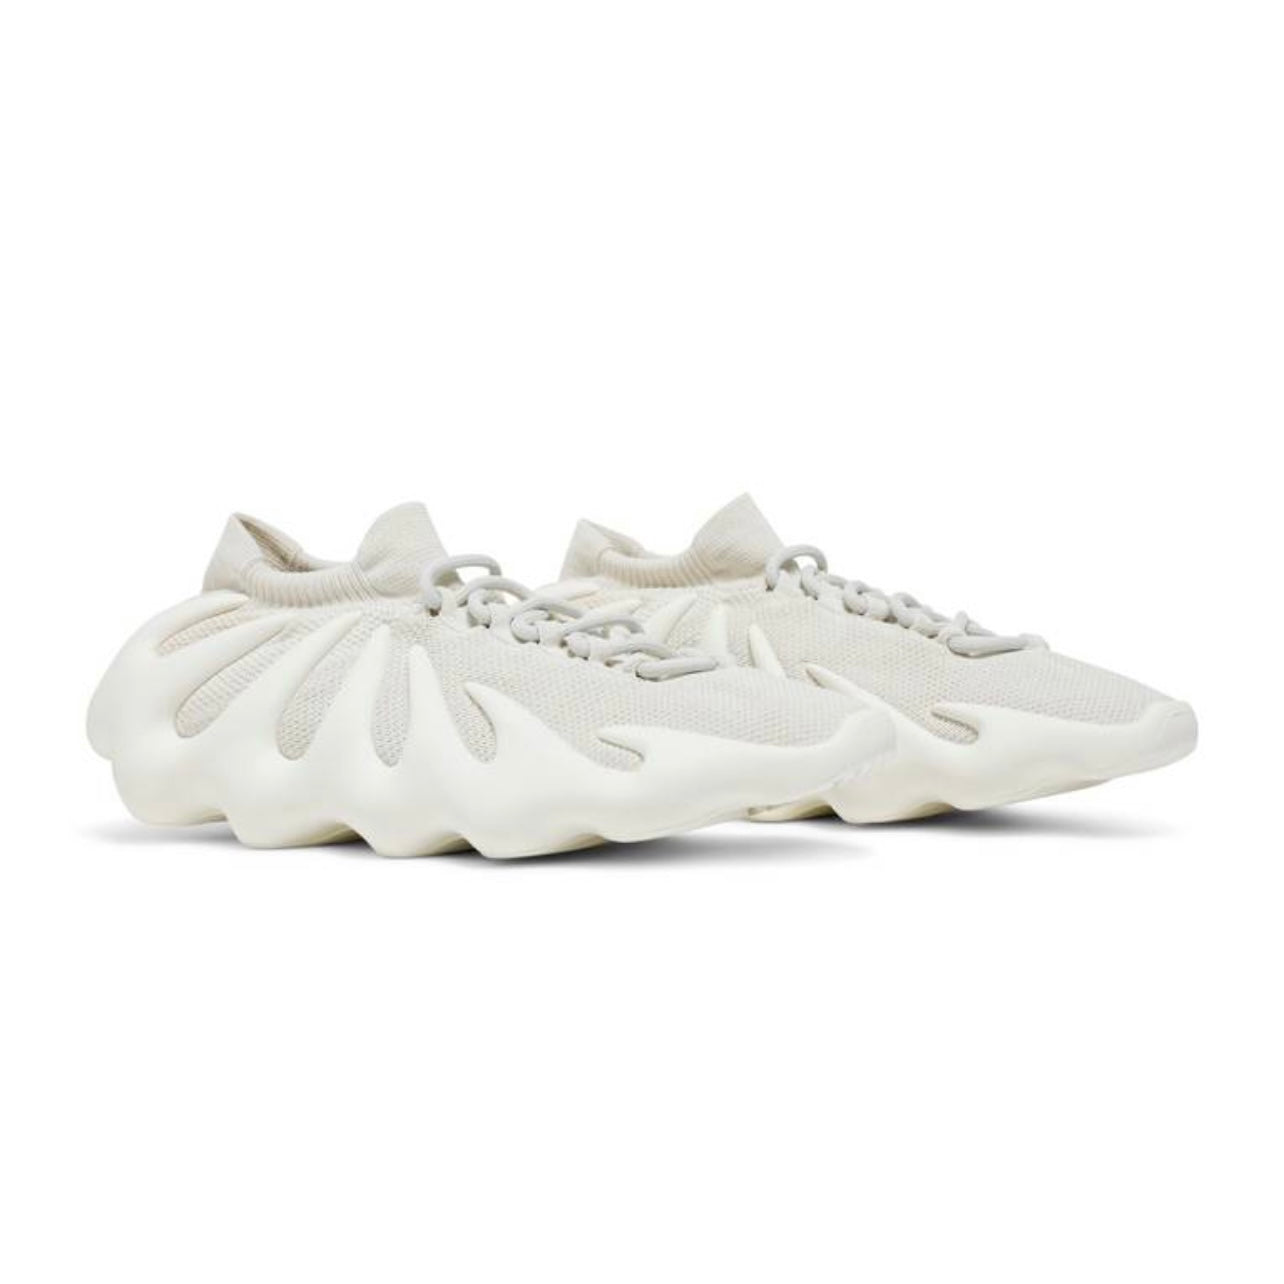 Adidas Yeezy 450 "Cloud White"